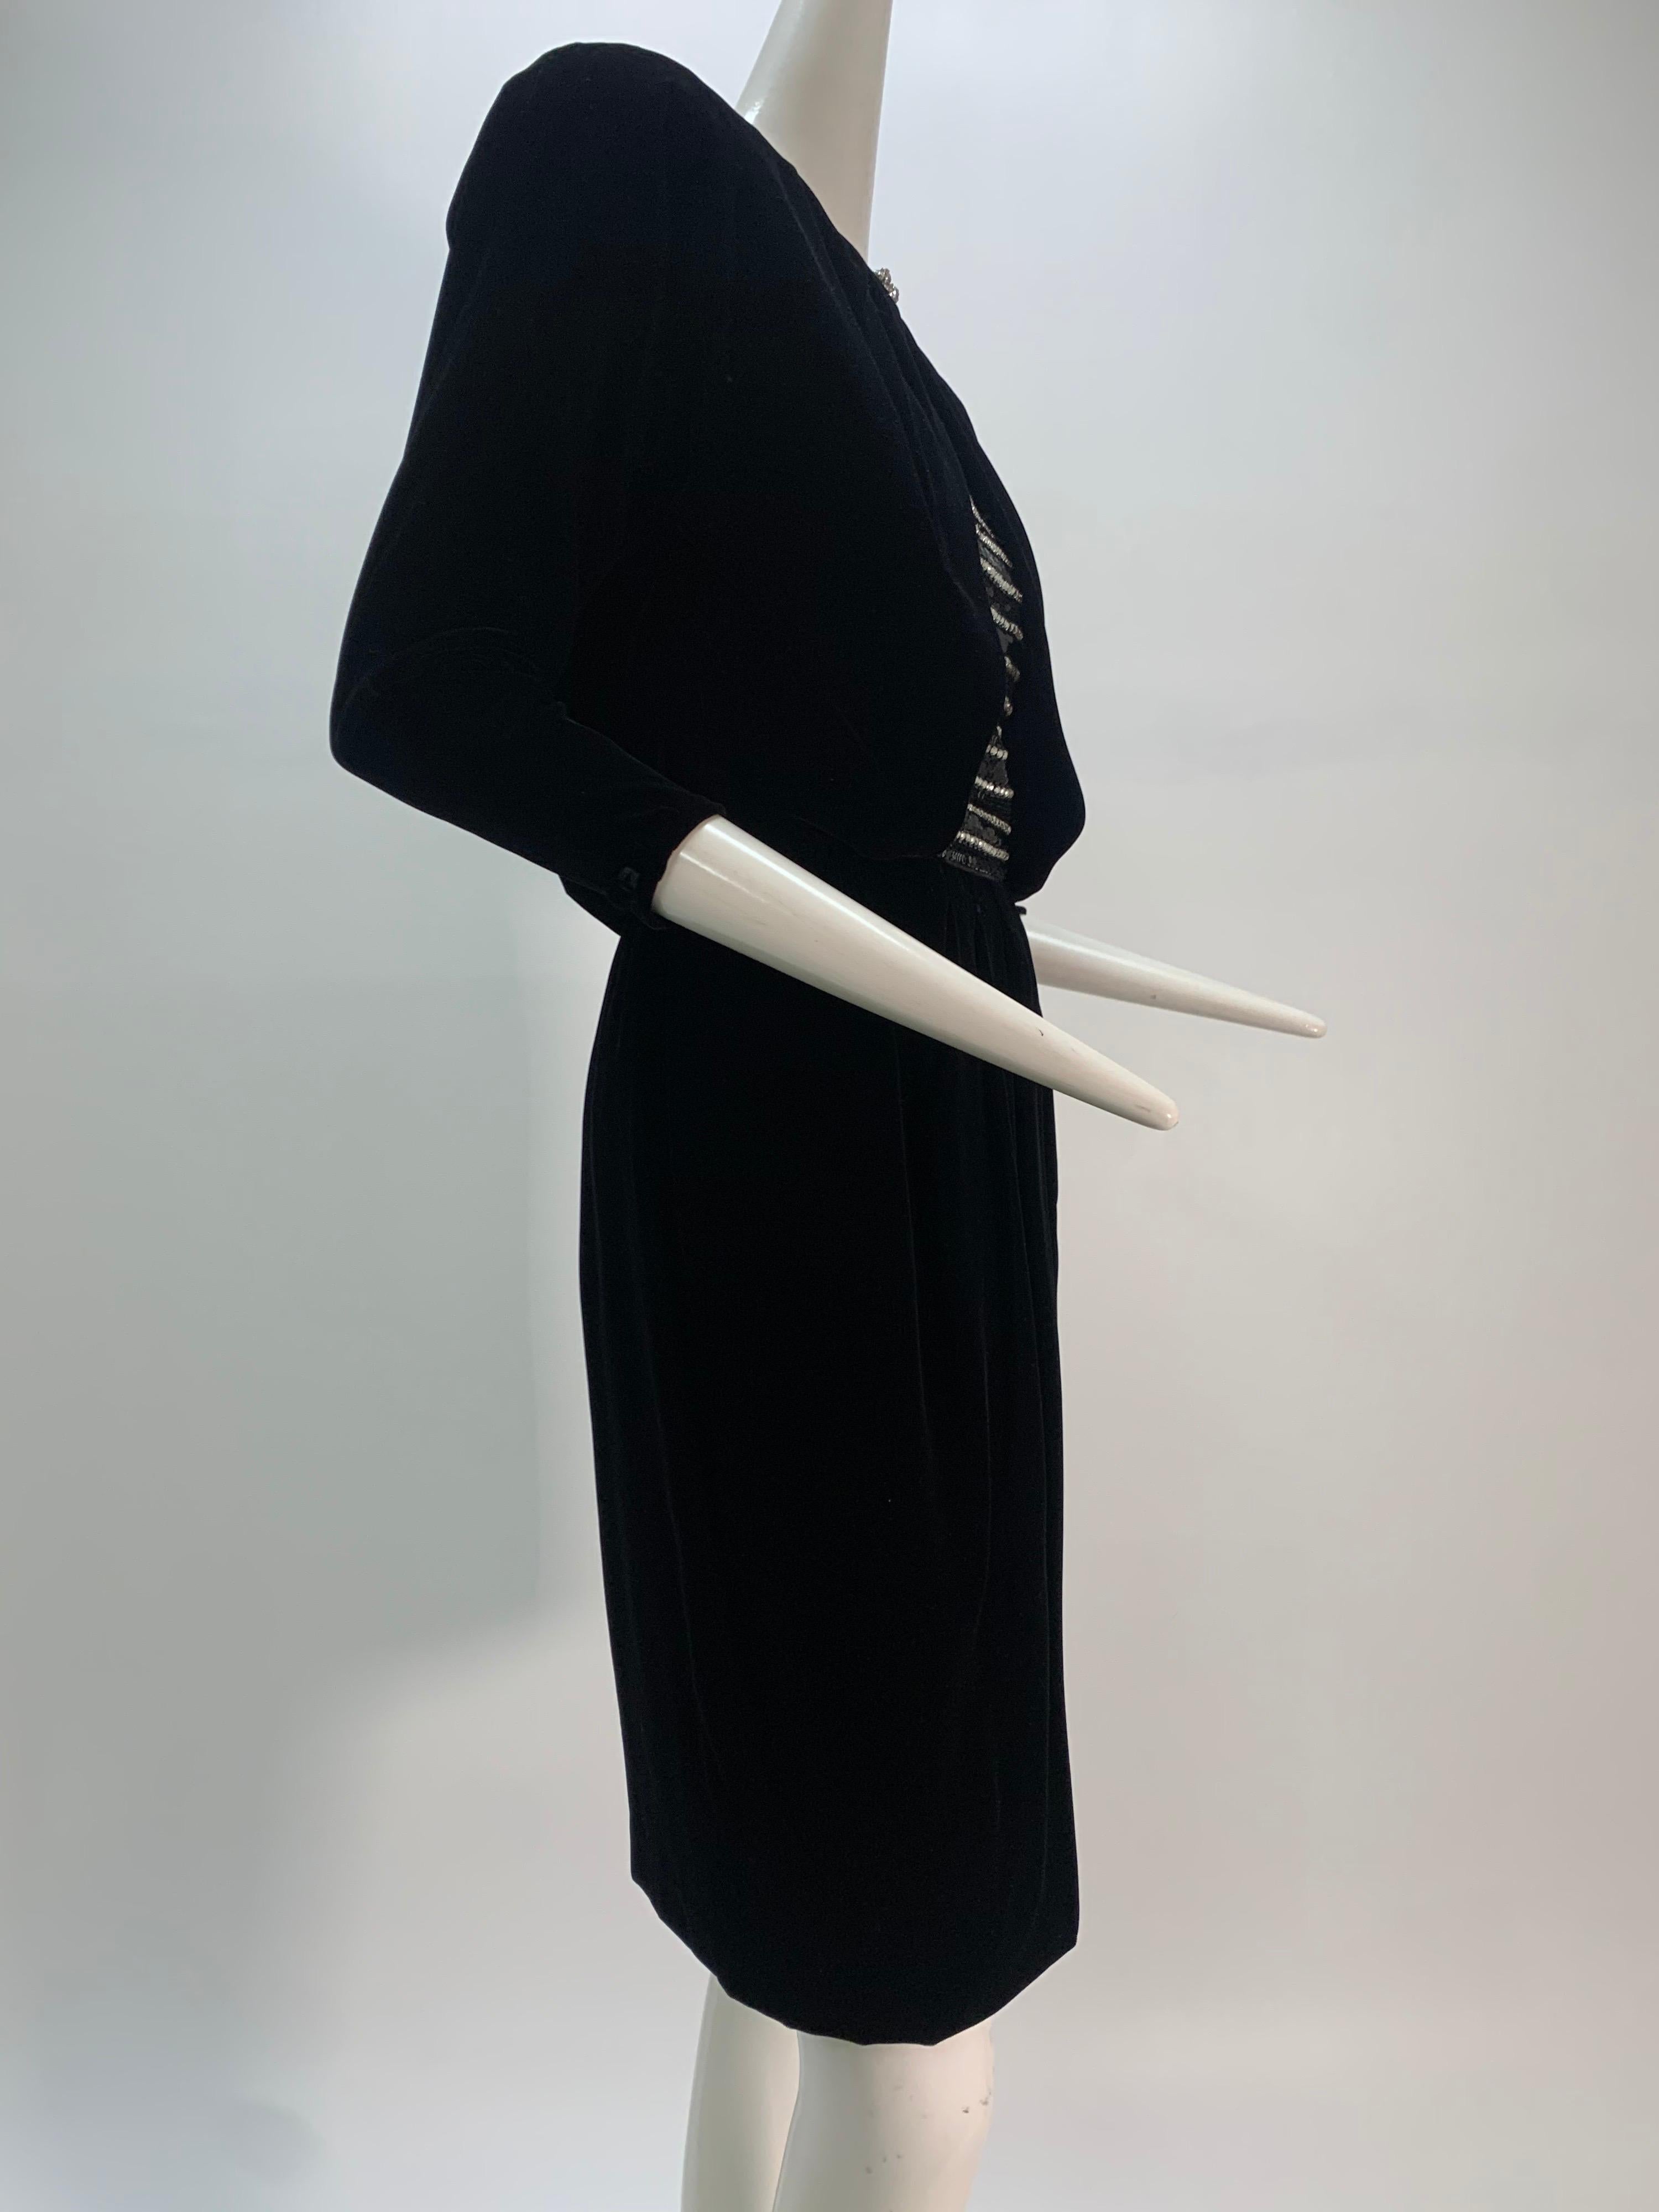 1980 Carolyne Roehm Black Velvet Cocktail Dress W/ Rhinestone & Sequin Stripes For Sale 2